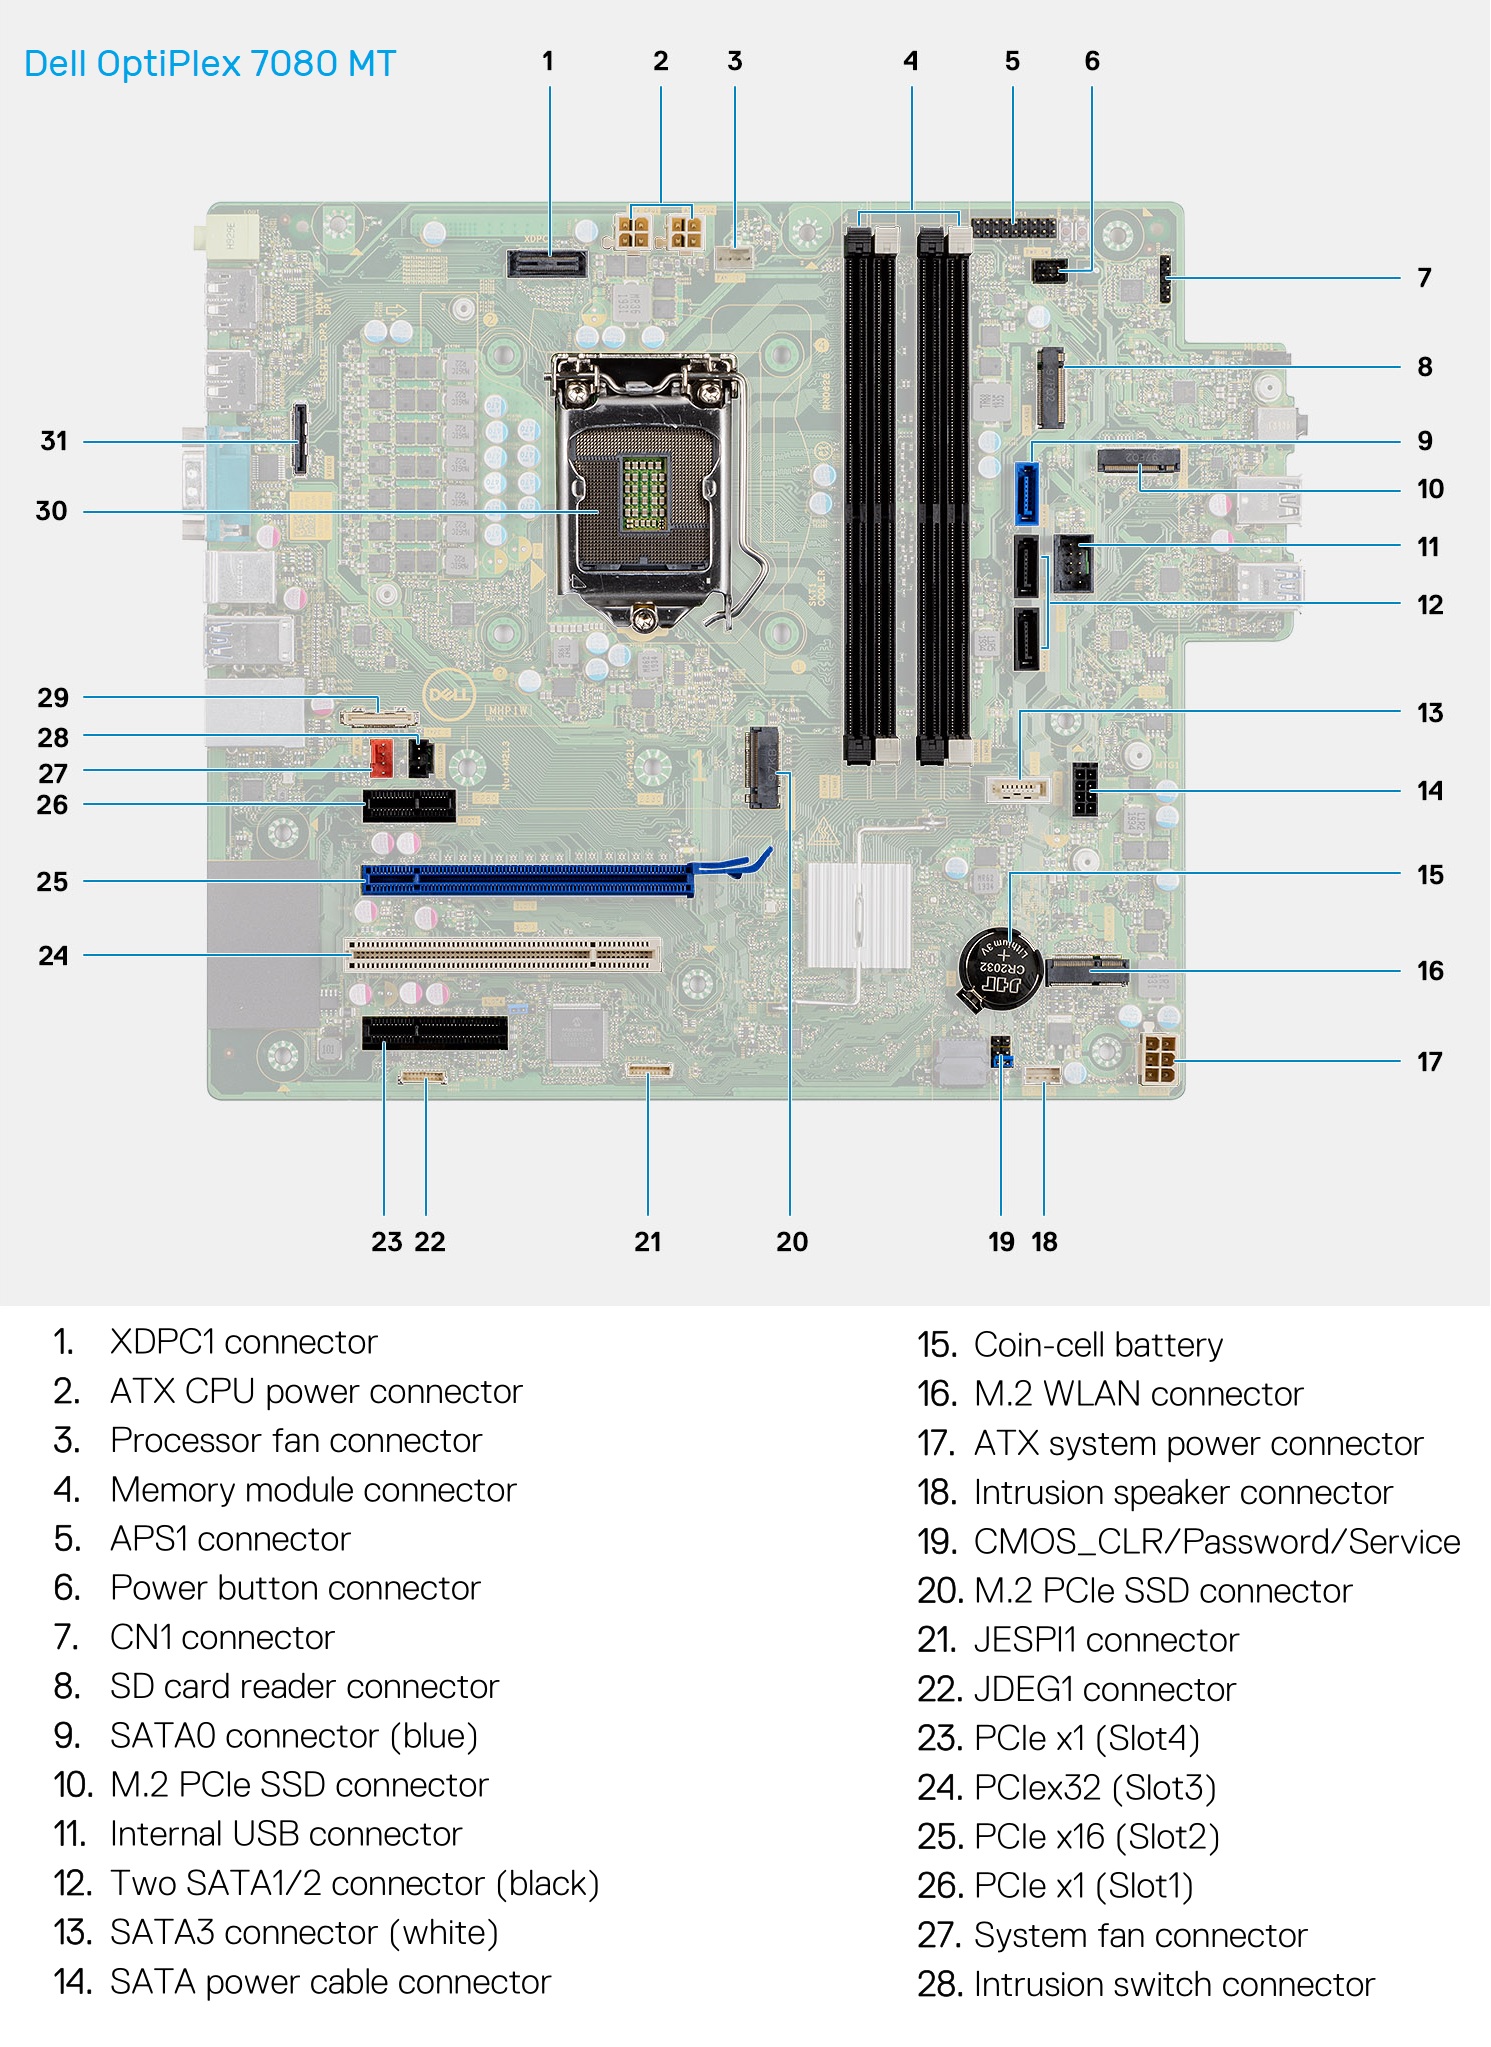 Dell Optiplex 990 Motherboard Diagram